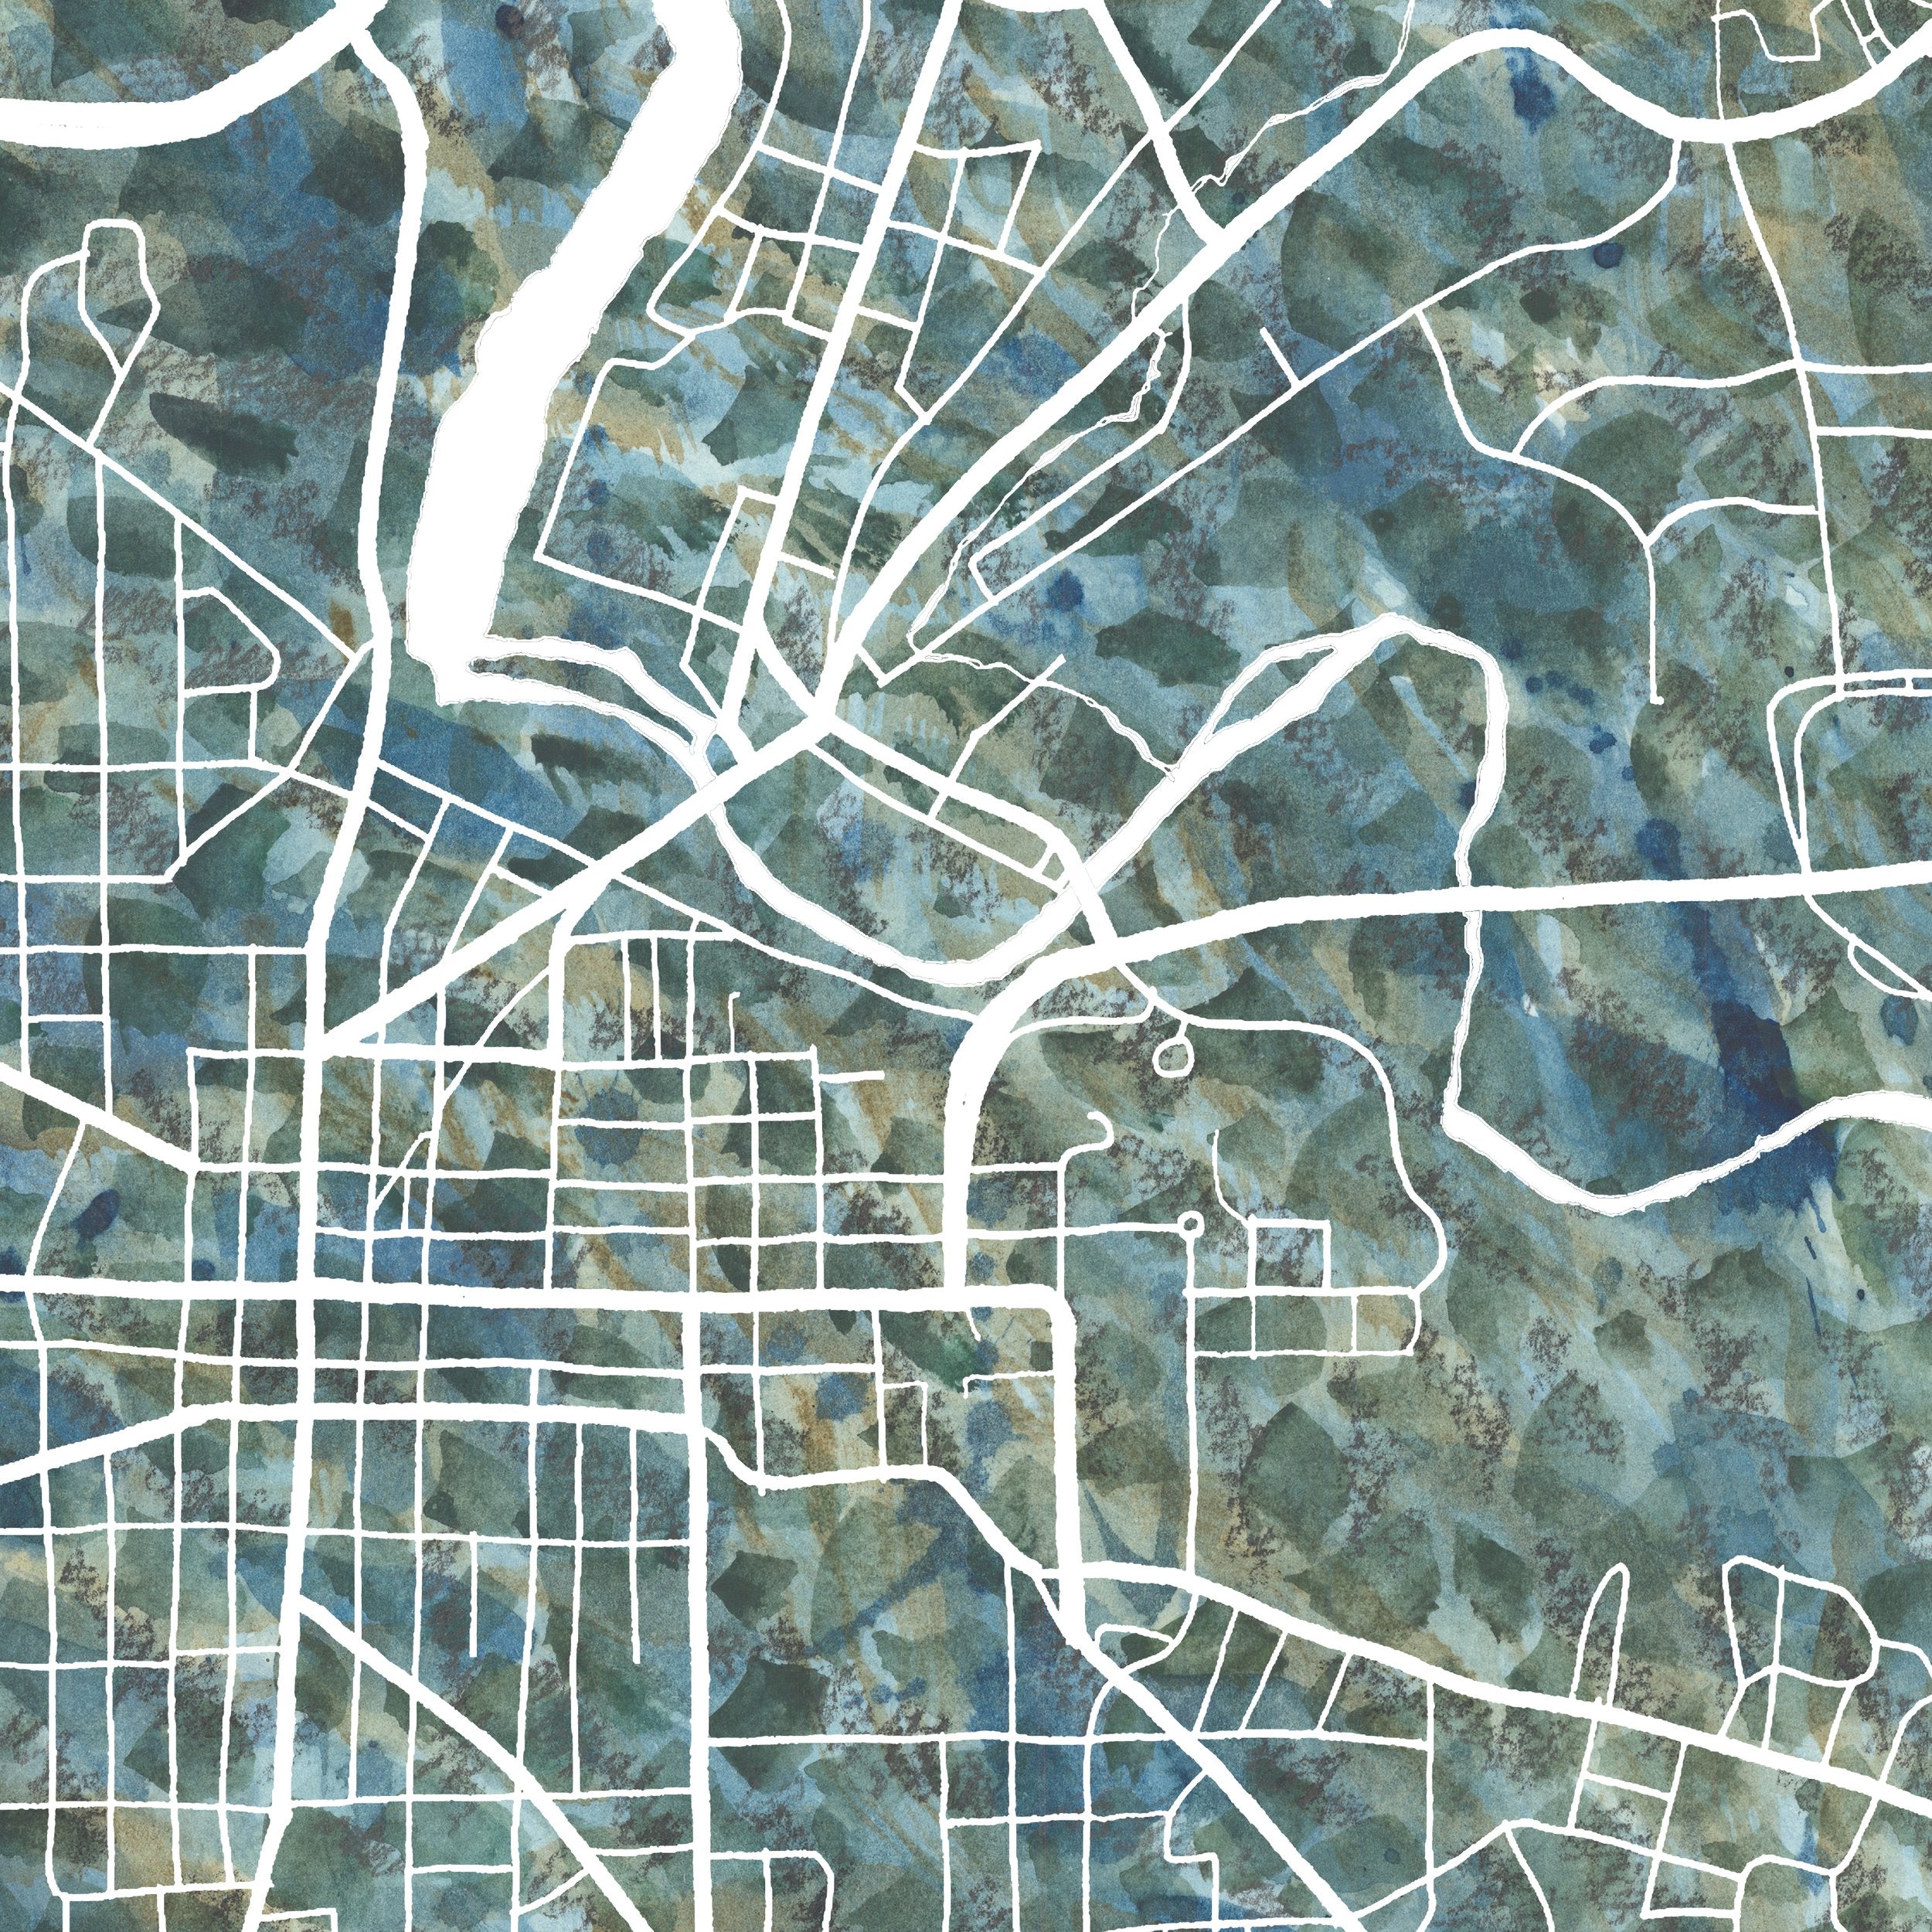 ANN ARBOR Urban Fabrics City Map: PRINT